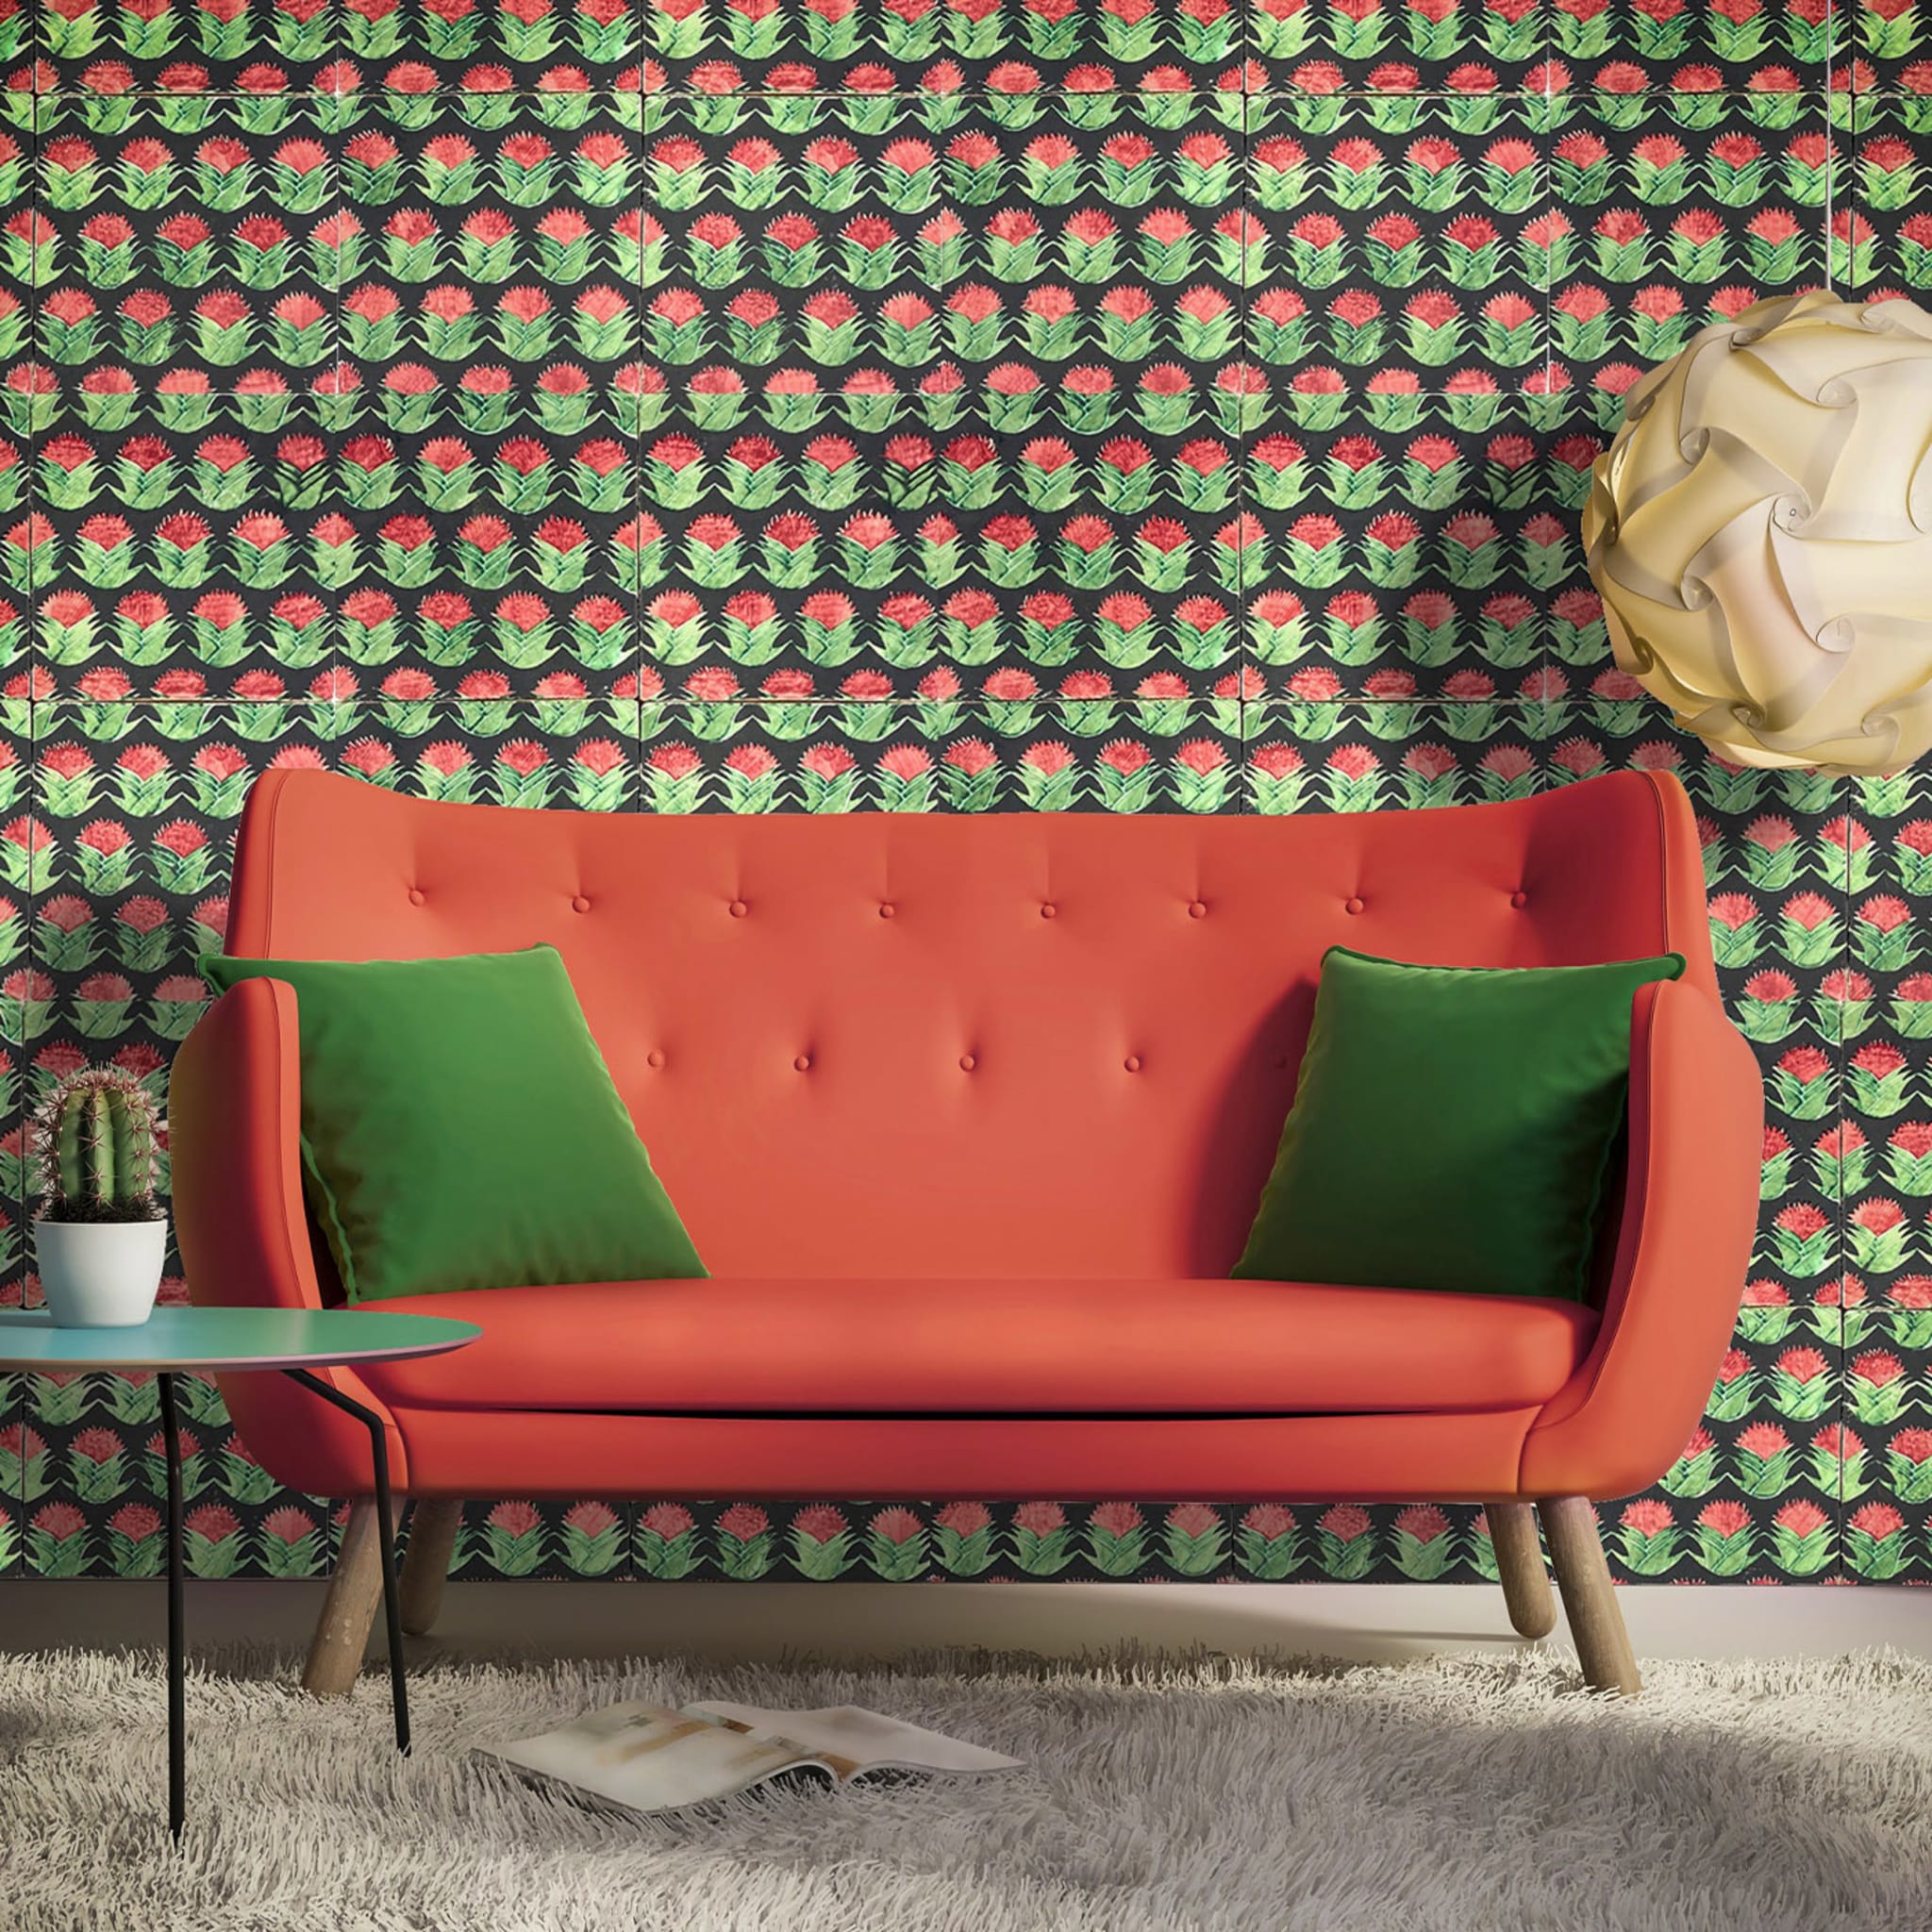 Kimeya Cardo Green Set of 4 Tiles by Vincenzo Messina - Alternative view 1